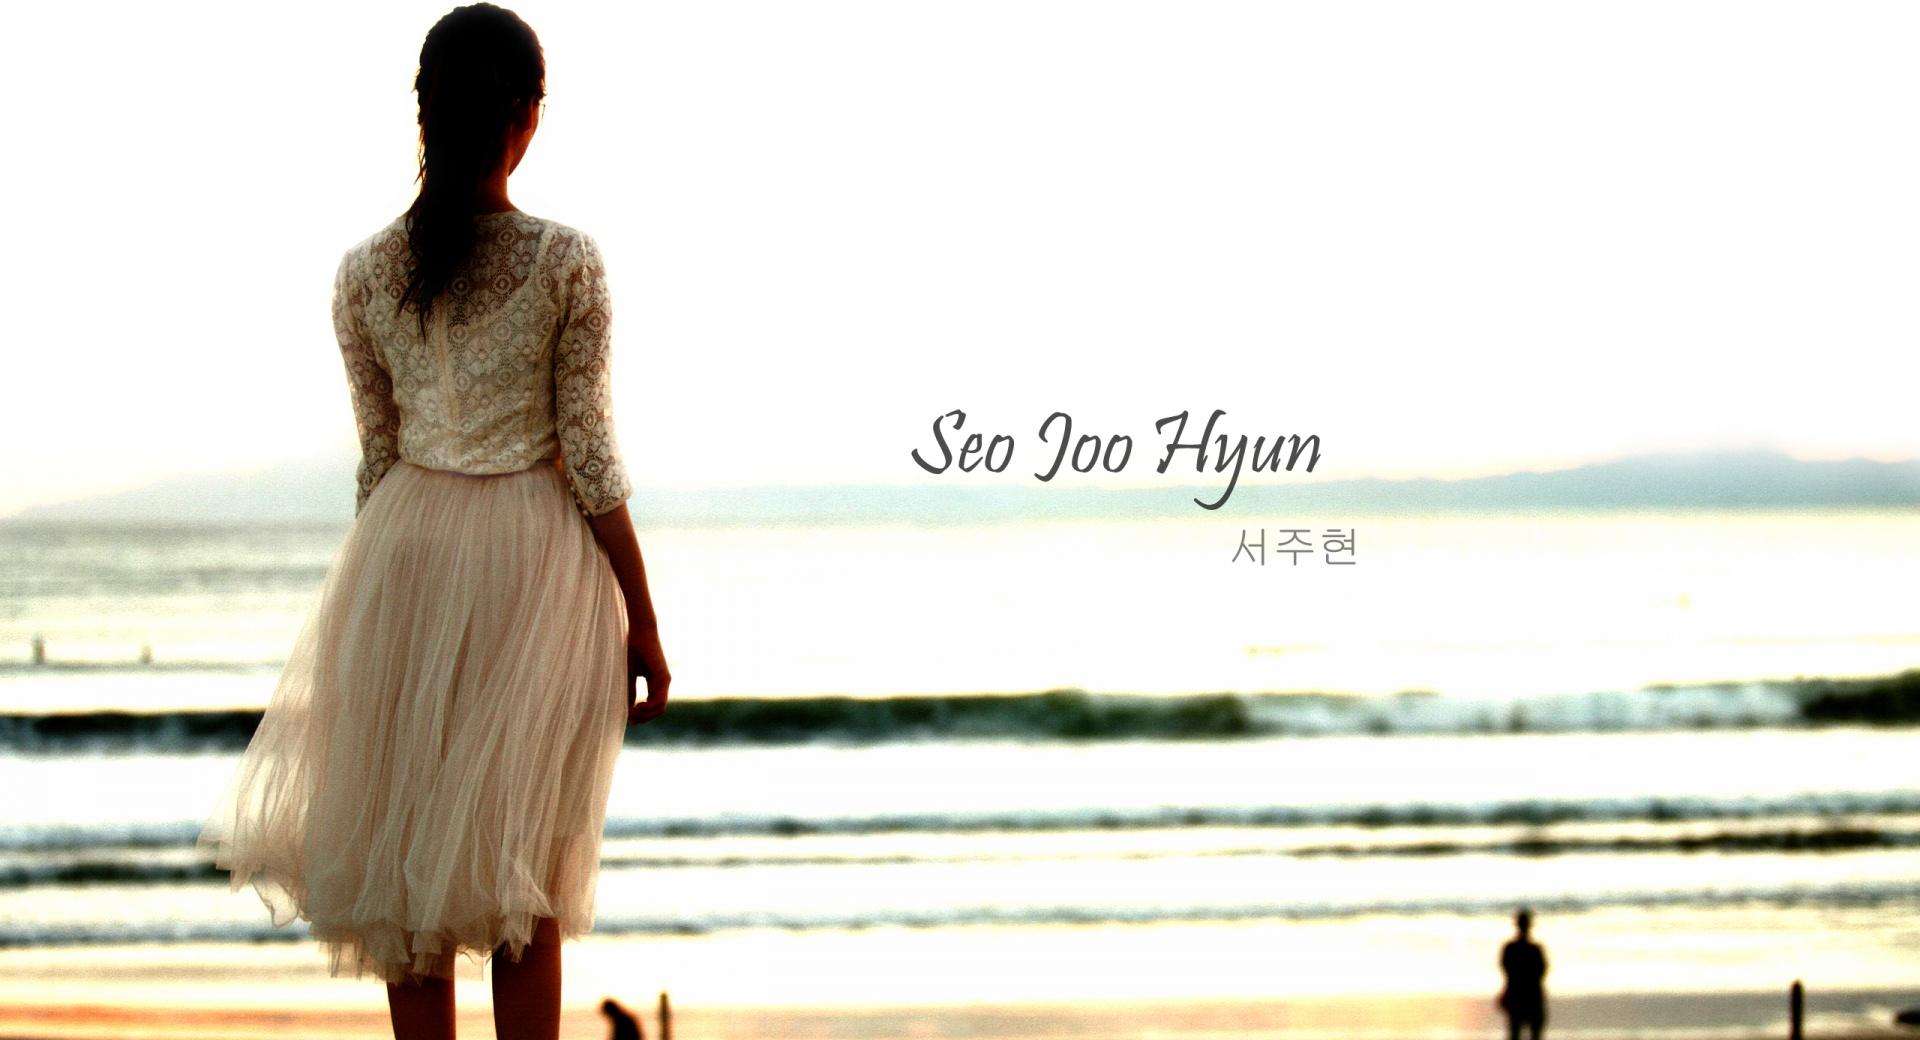 SNSD Seo Joo Hyun at 1024 x 1024 iPad size wallpapers HD quality